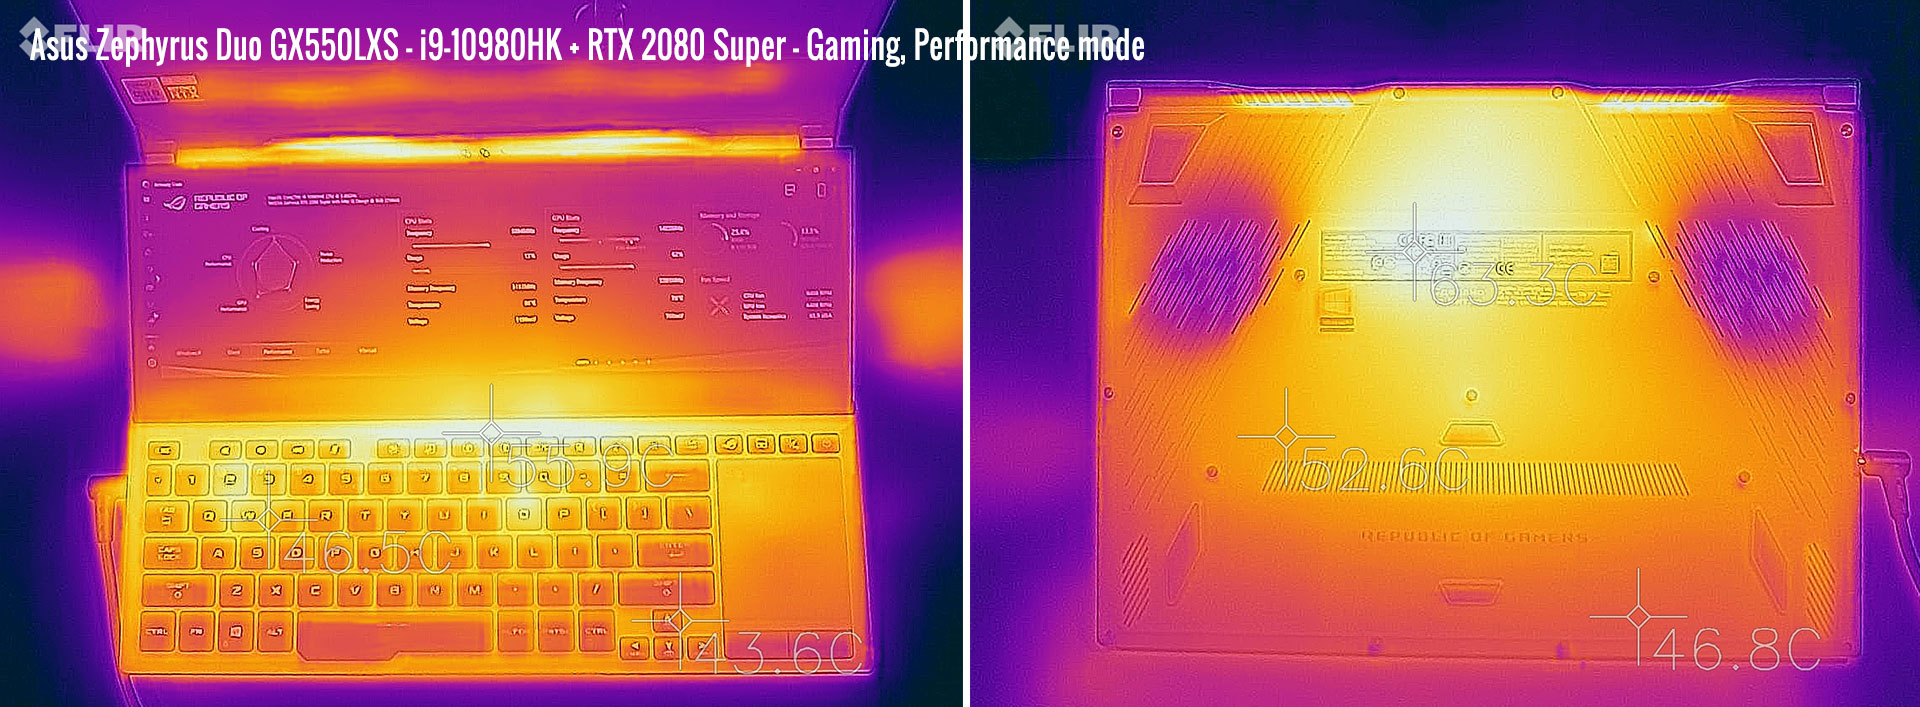 temperatures asus gx550lxs gaming performance